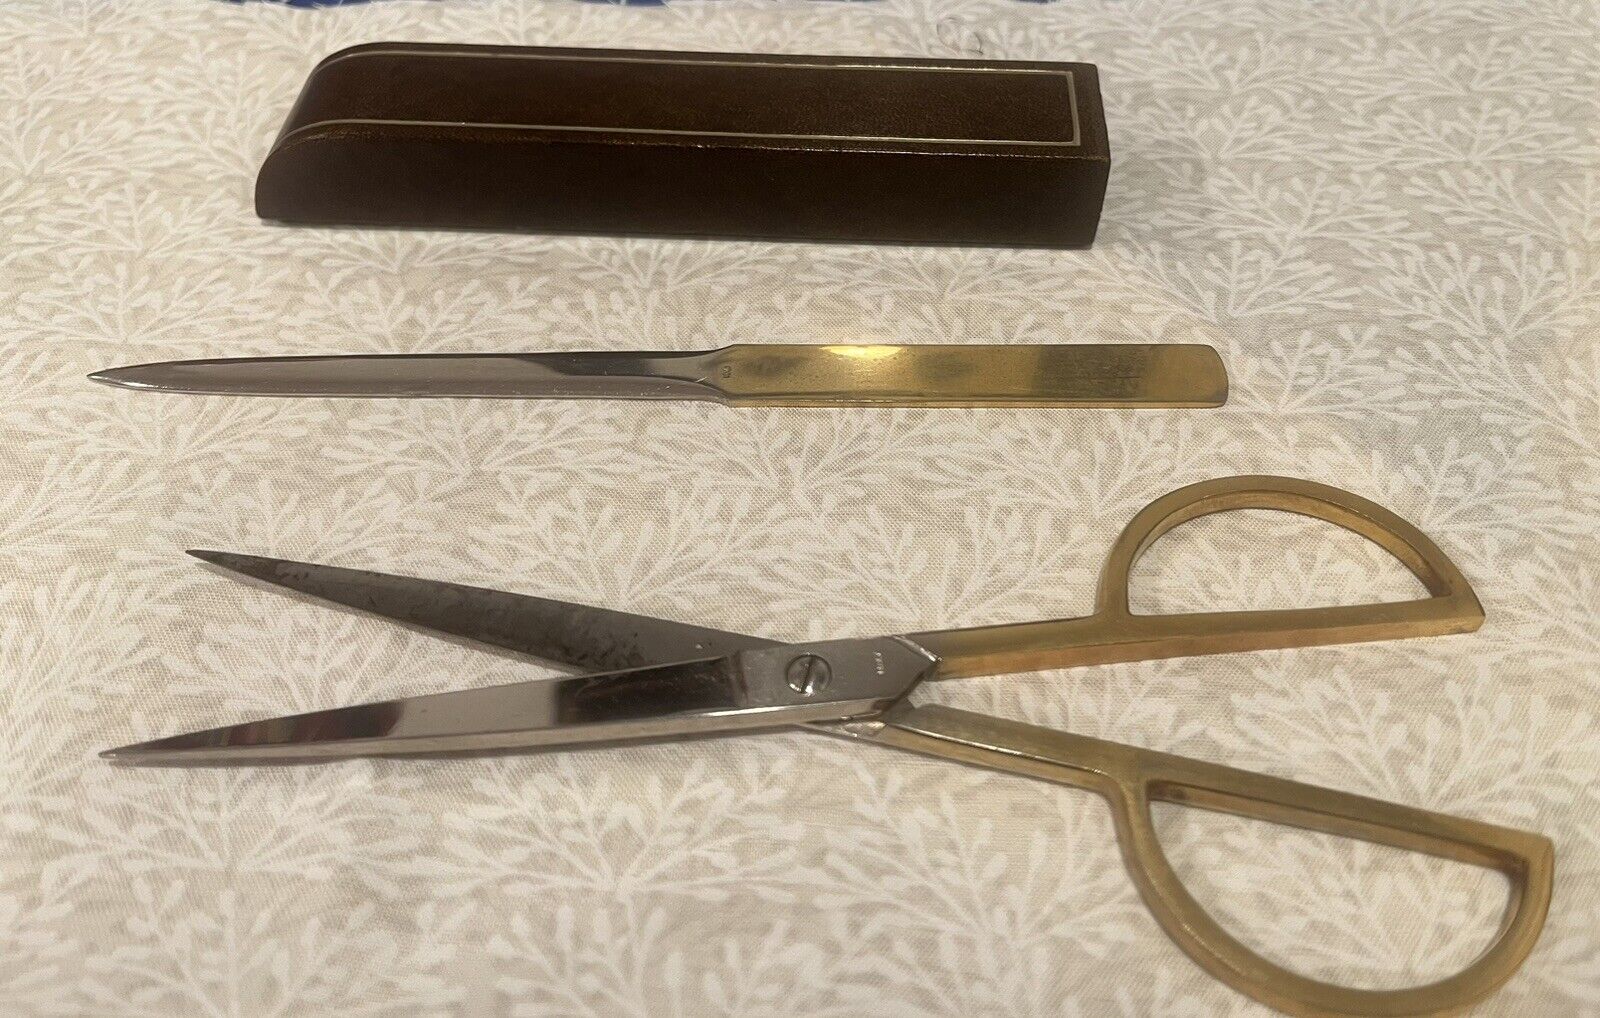 Vintage Desk Set Scissors Letter Opener Leather Sheath Art Deco